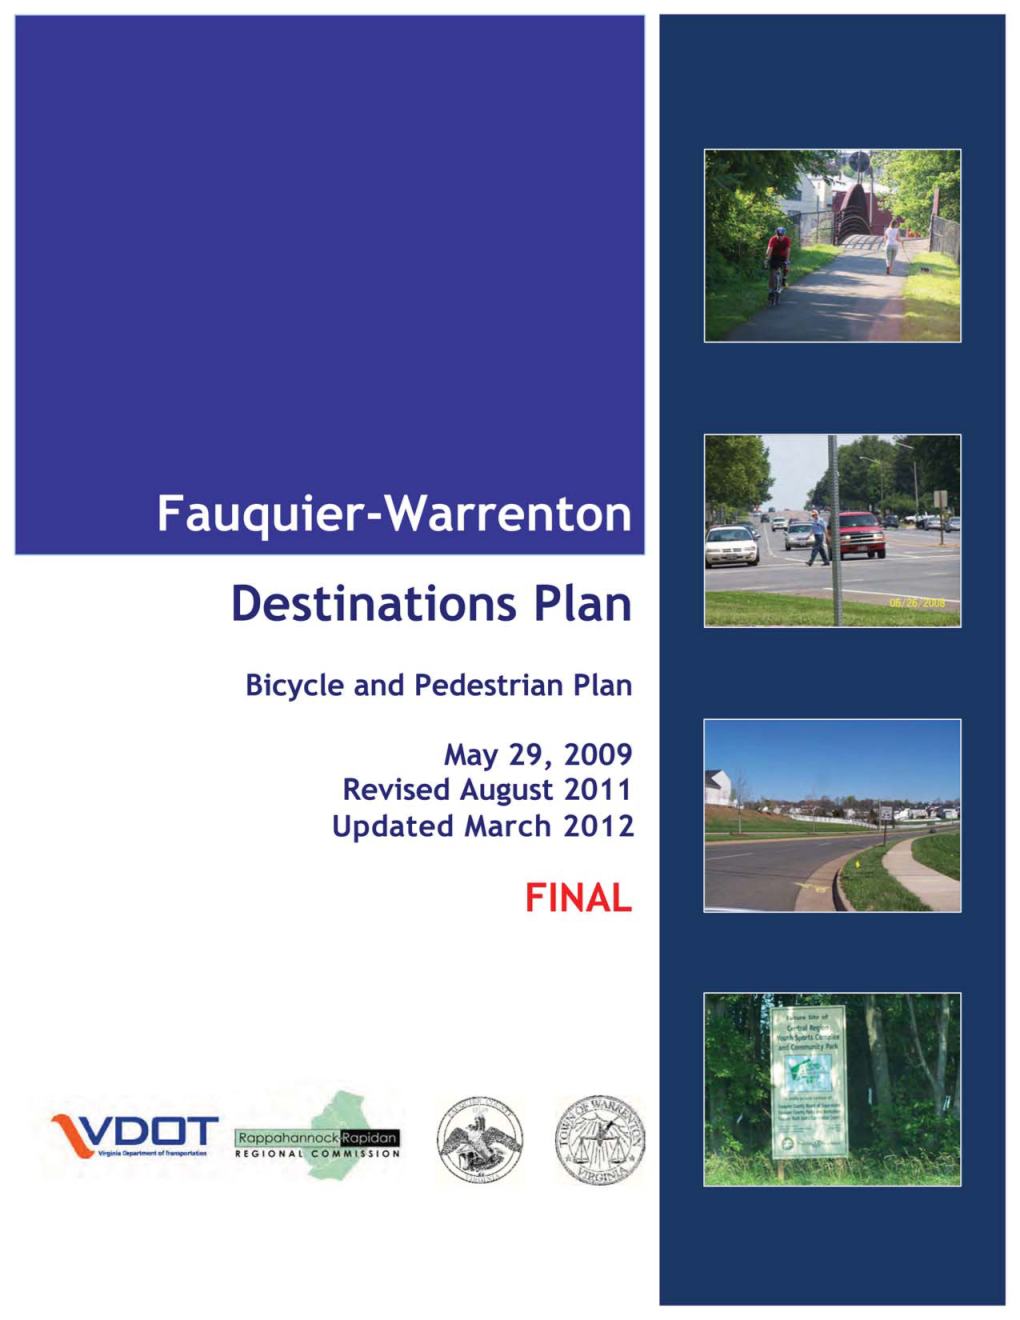 Fauquier-Warrenton Destinations Plan Table of Contents